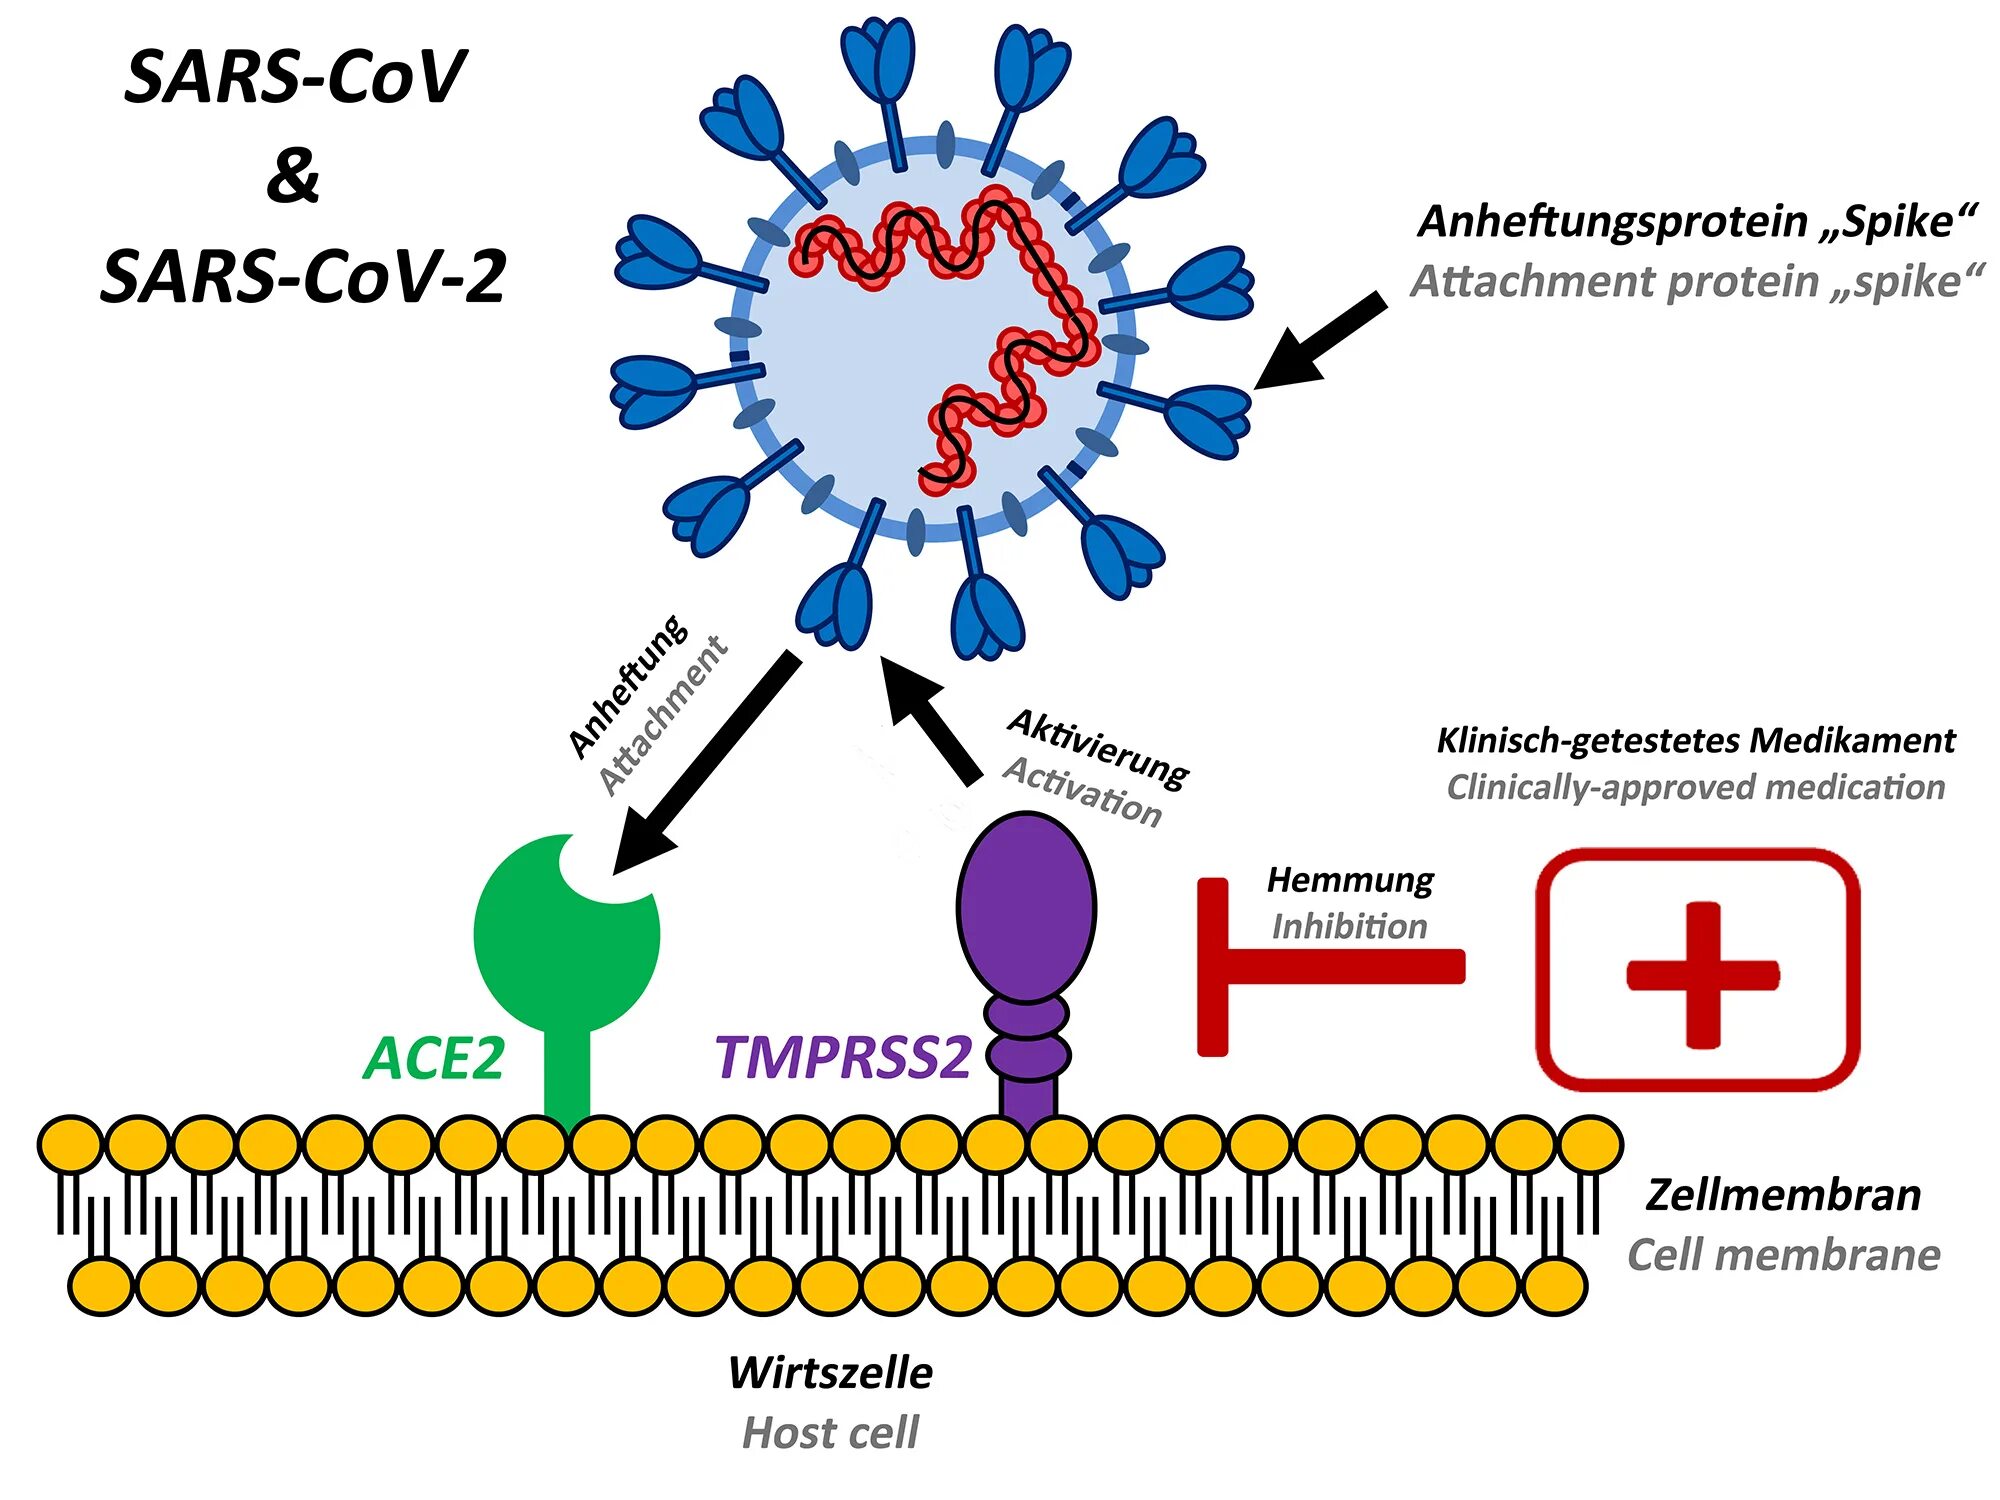 Ace 2 Рецептор коронавирус. Коронавирус строение Covid 19. Рецепторы клеток для SARS-cov-2. Строение вируса SARS-cov-2. Коронавирус является